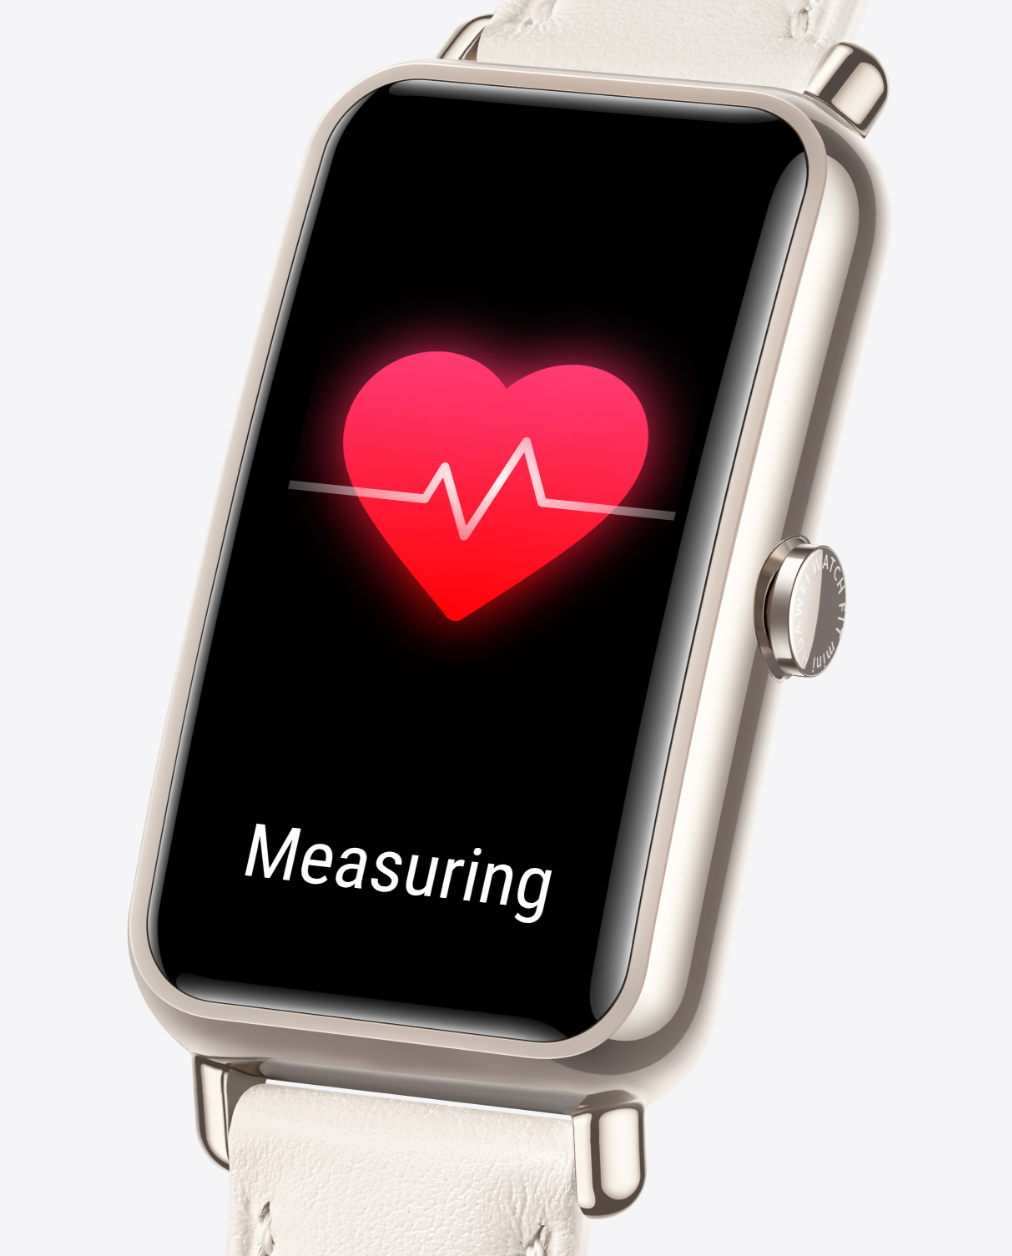 huawei watch fit mini heart rate monitoring